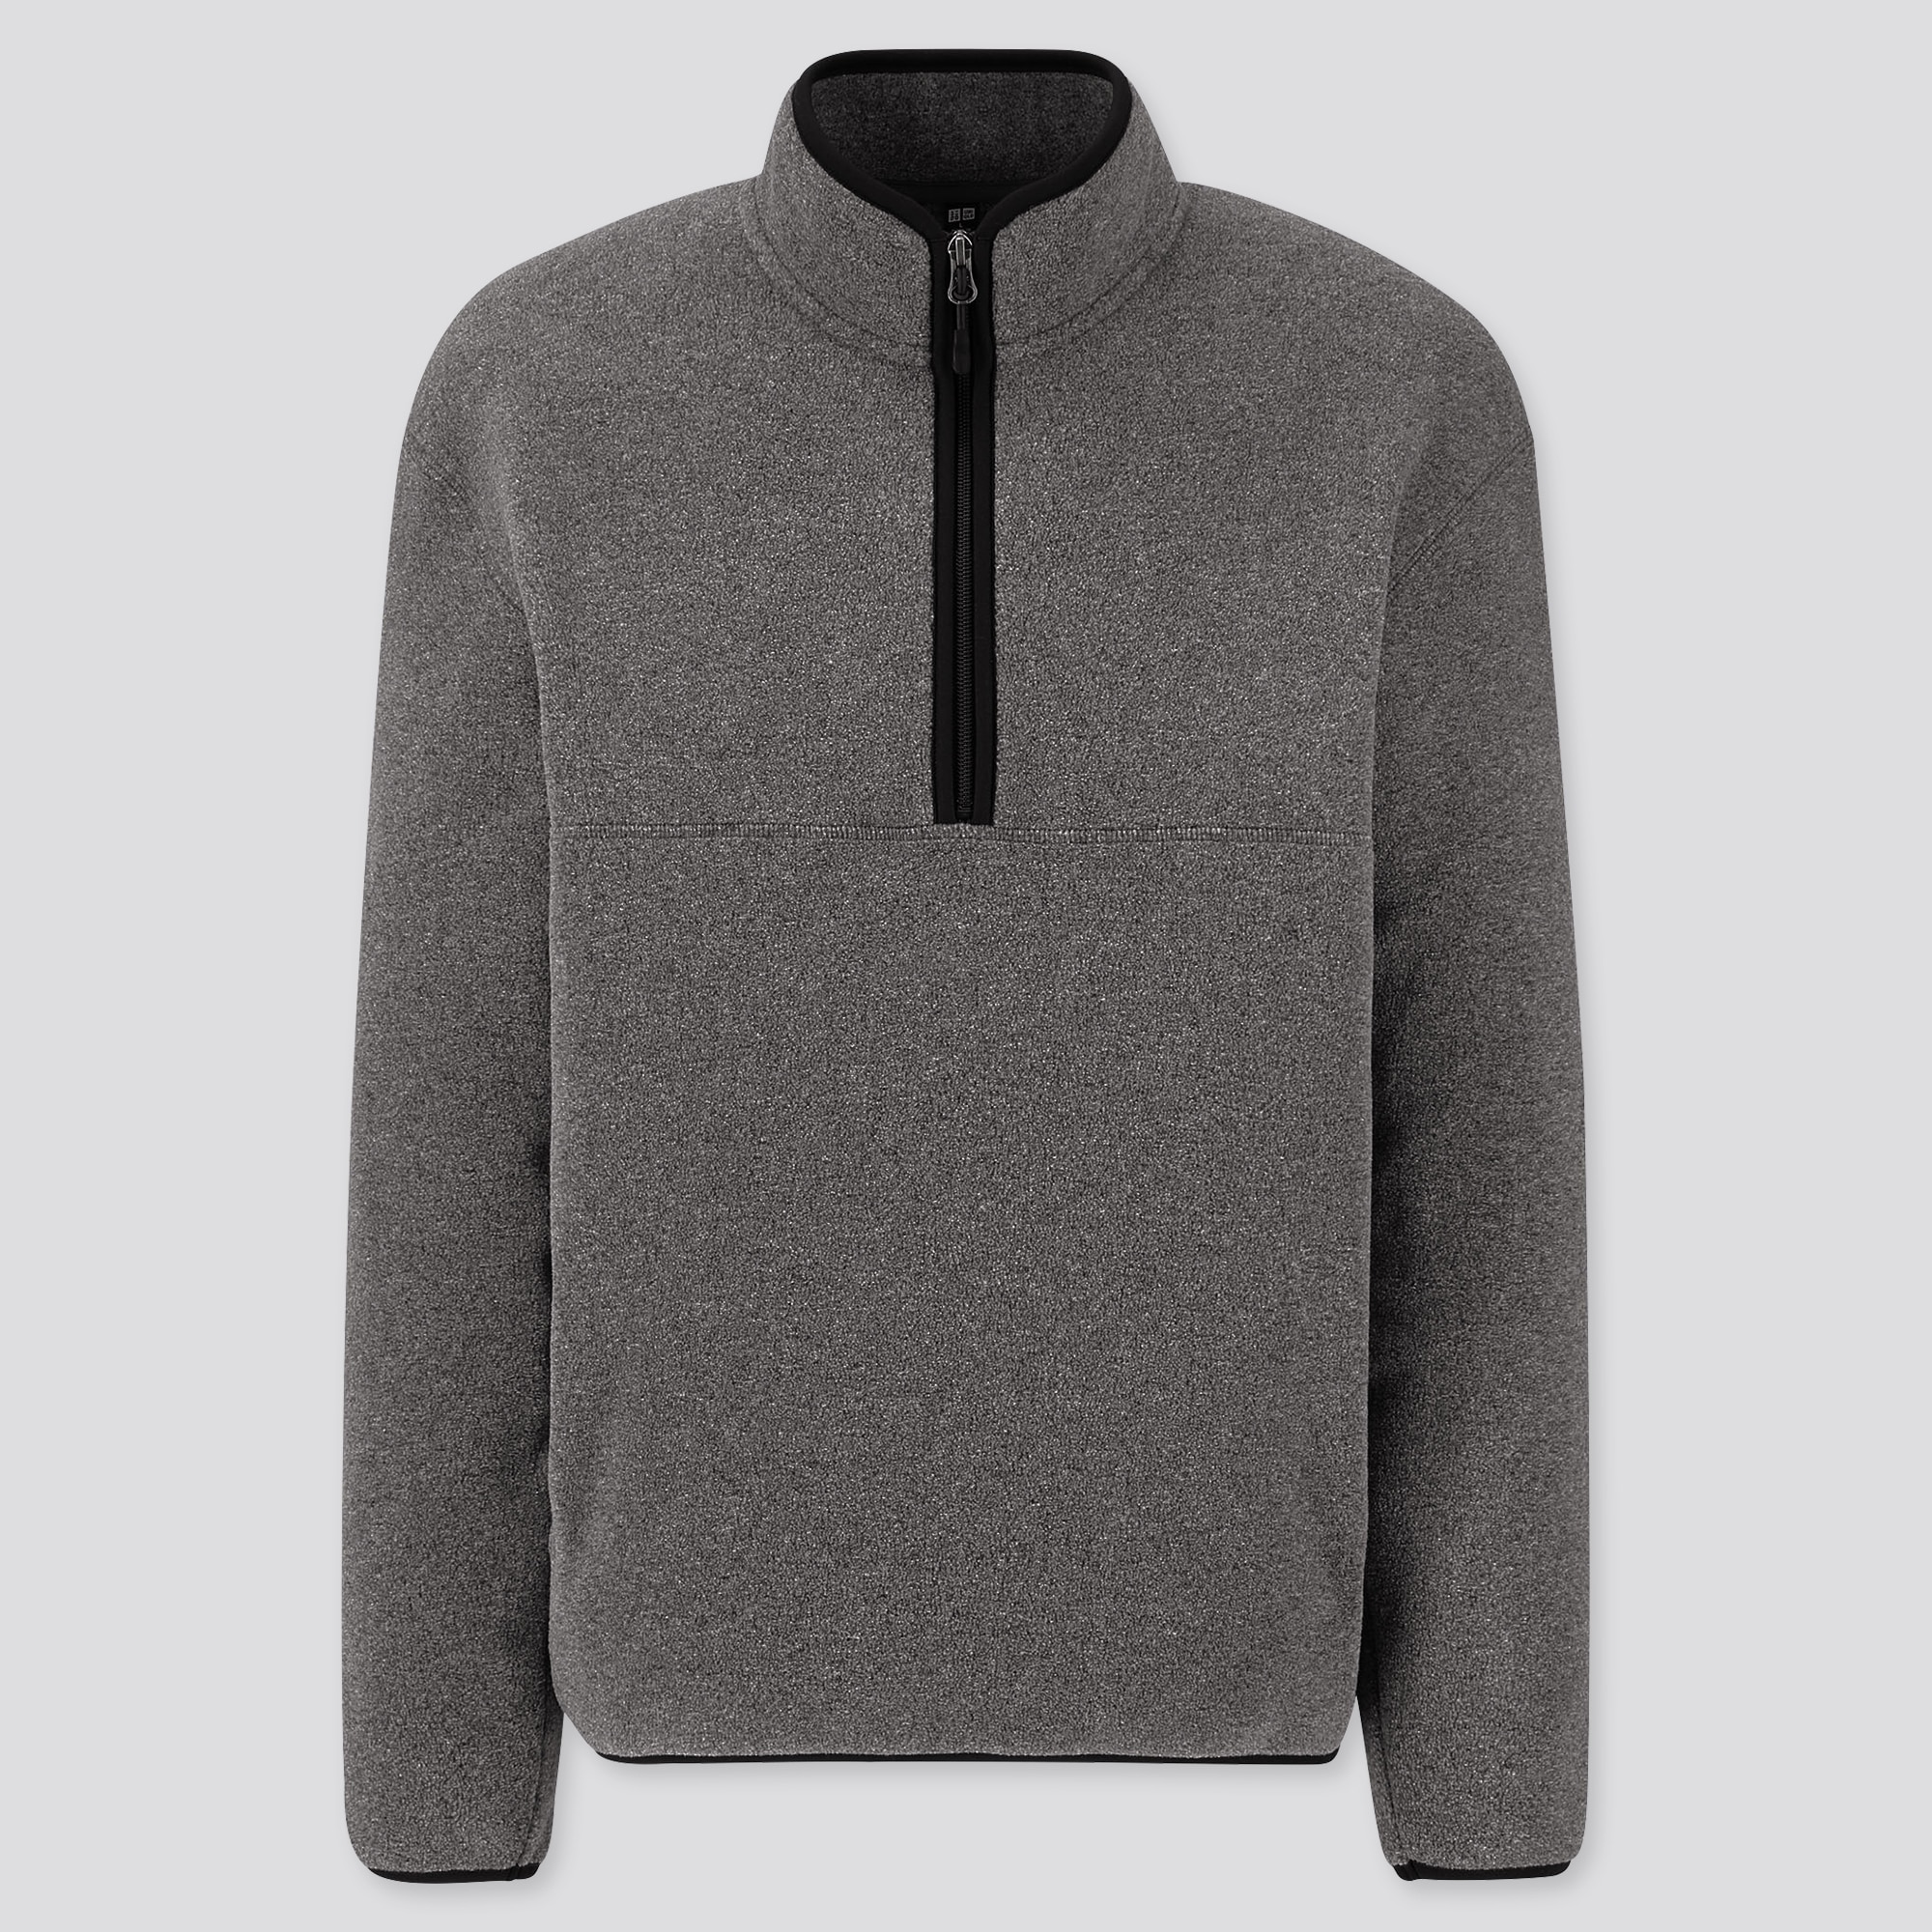 ssz 22aw fleece pullover shirt gray M - ジャケット/アウター